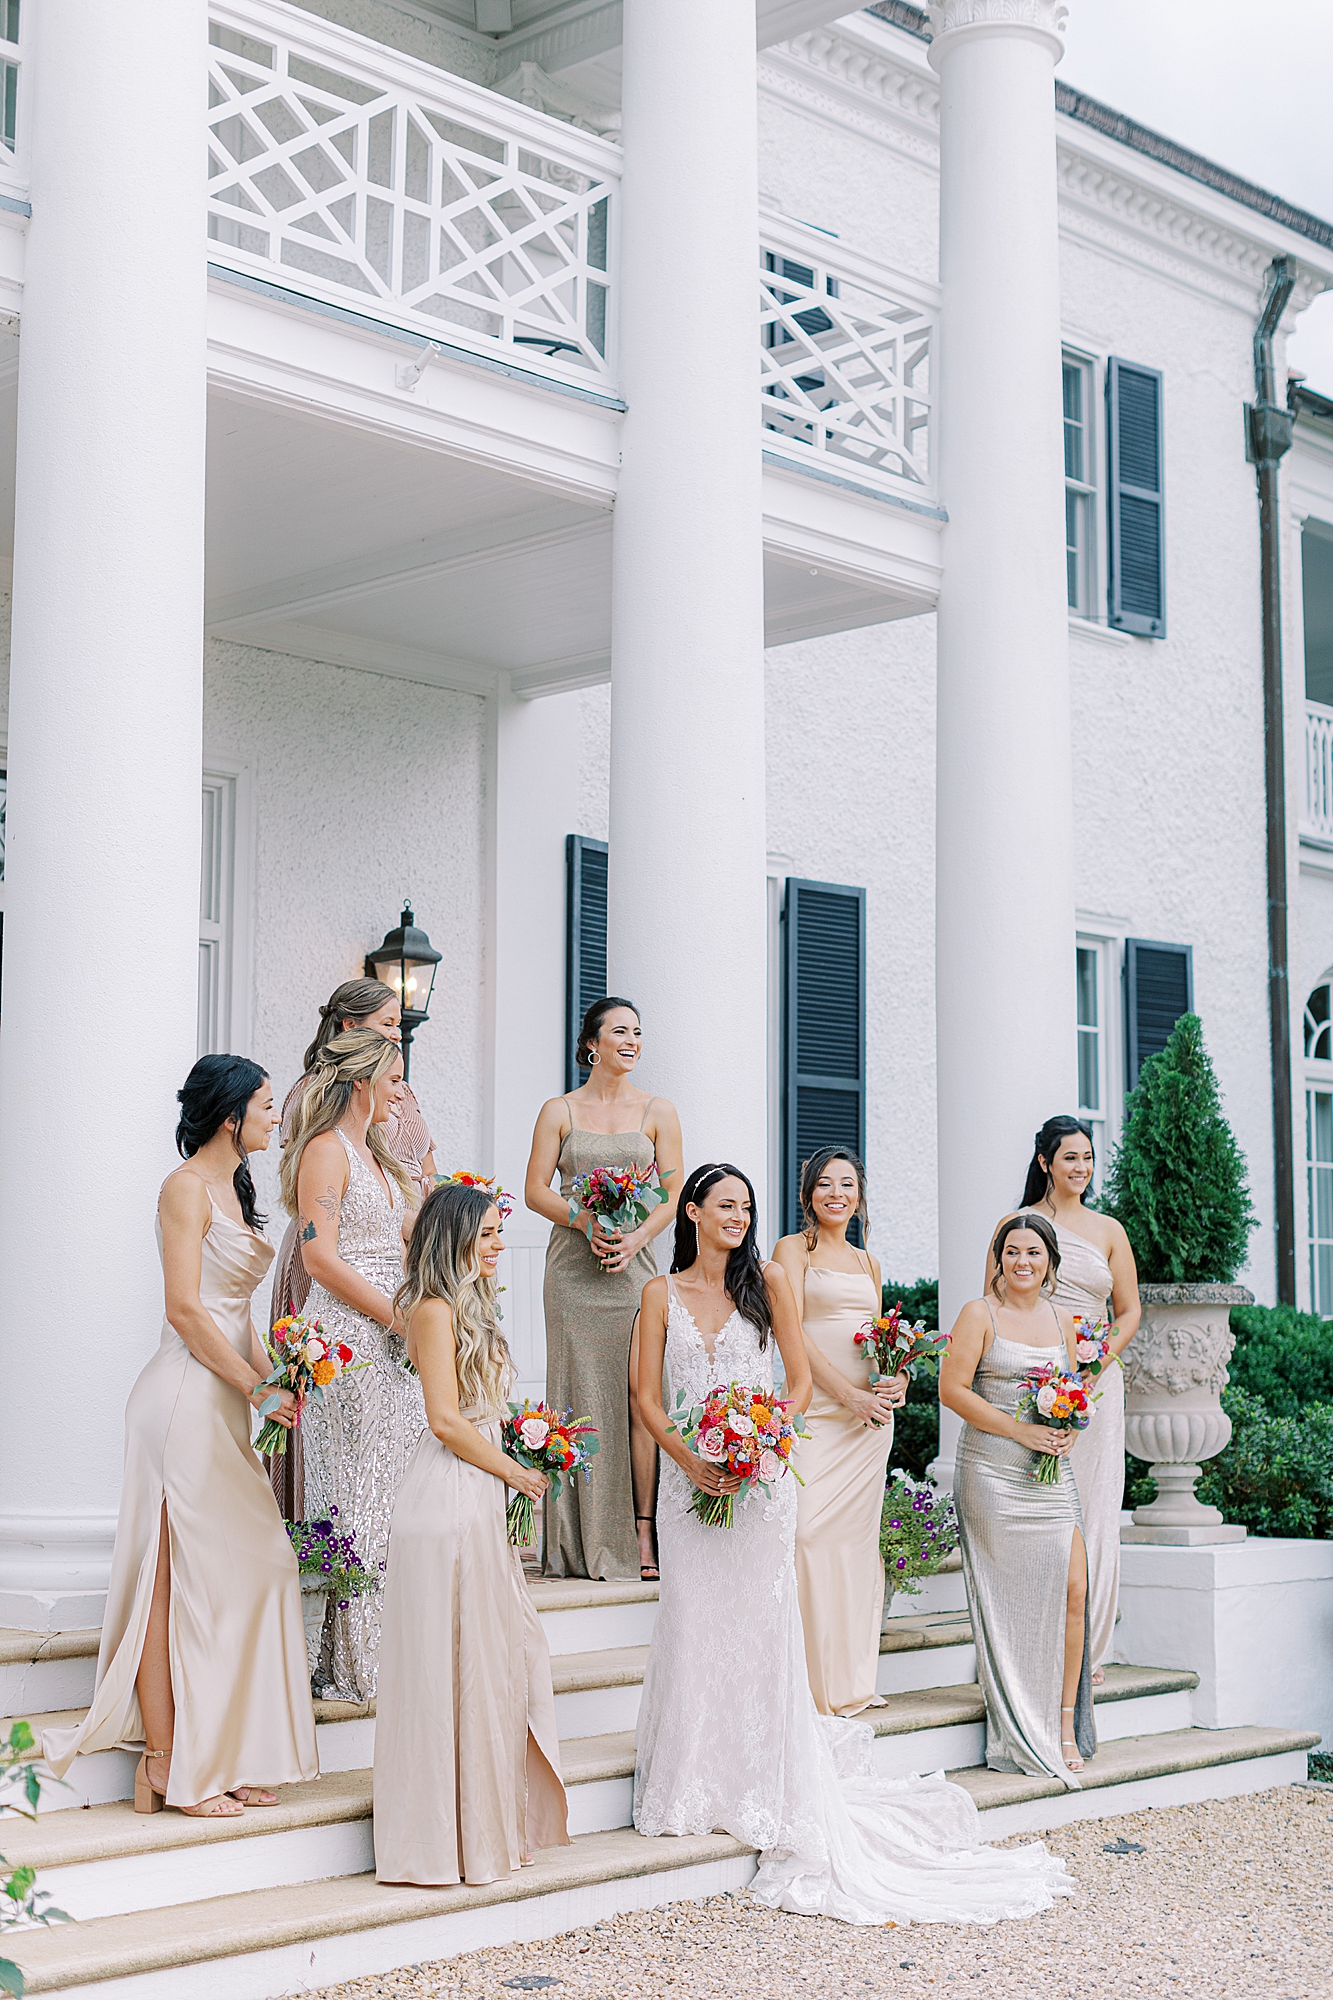 Editorial bridesmaid photos at vineyard wedding by Charlottesville wedding photographer.